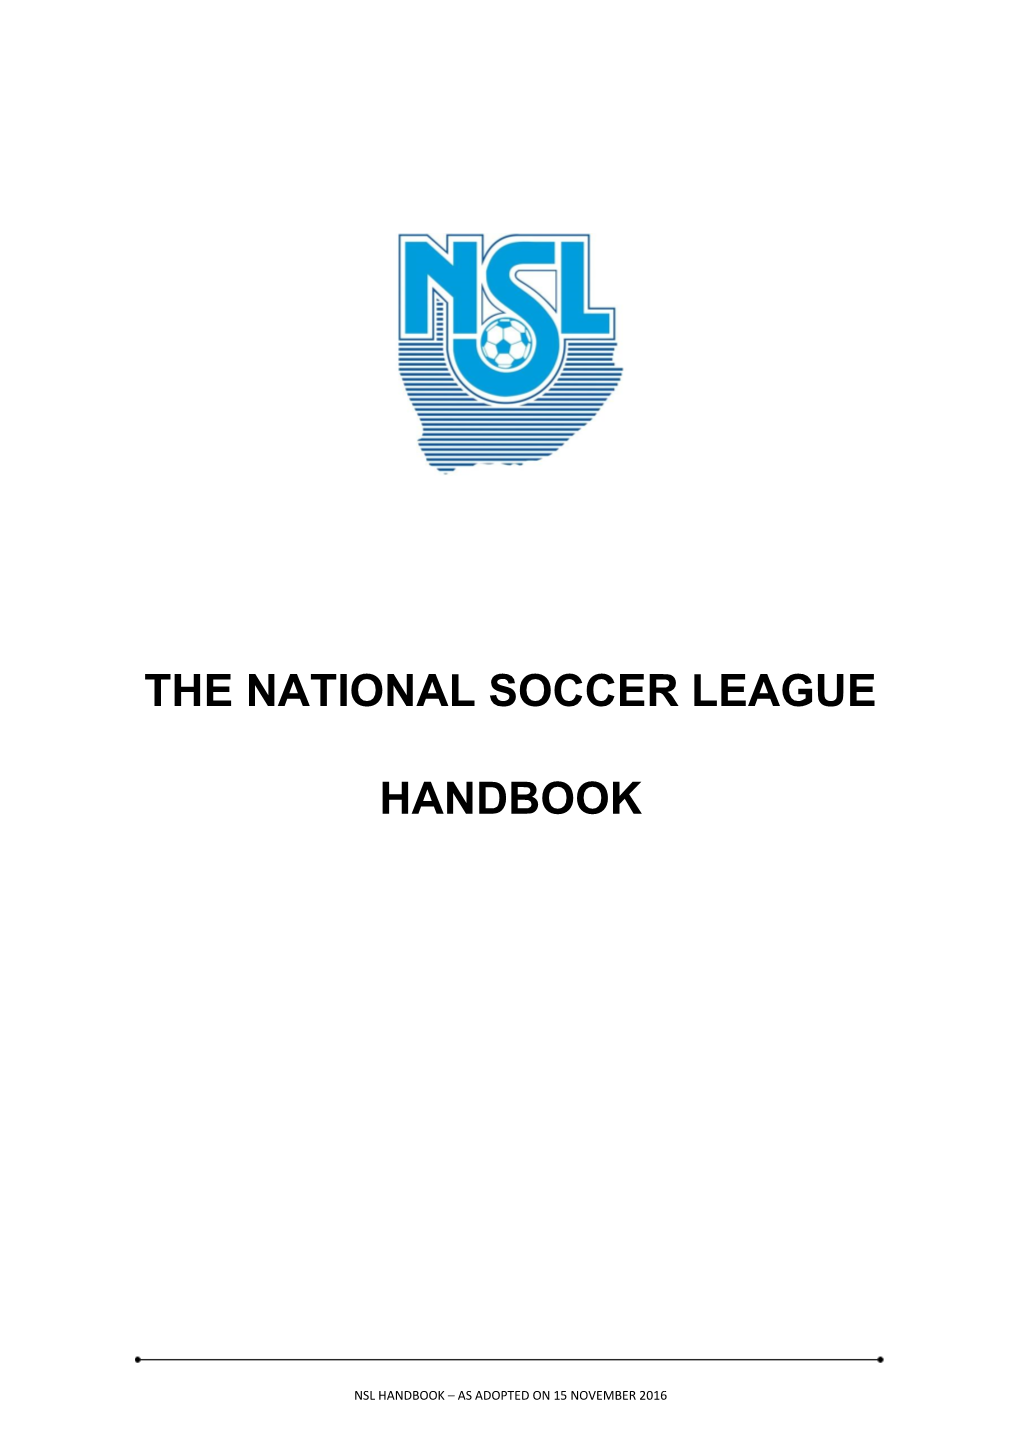 The National Soccer League Handbook